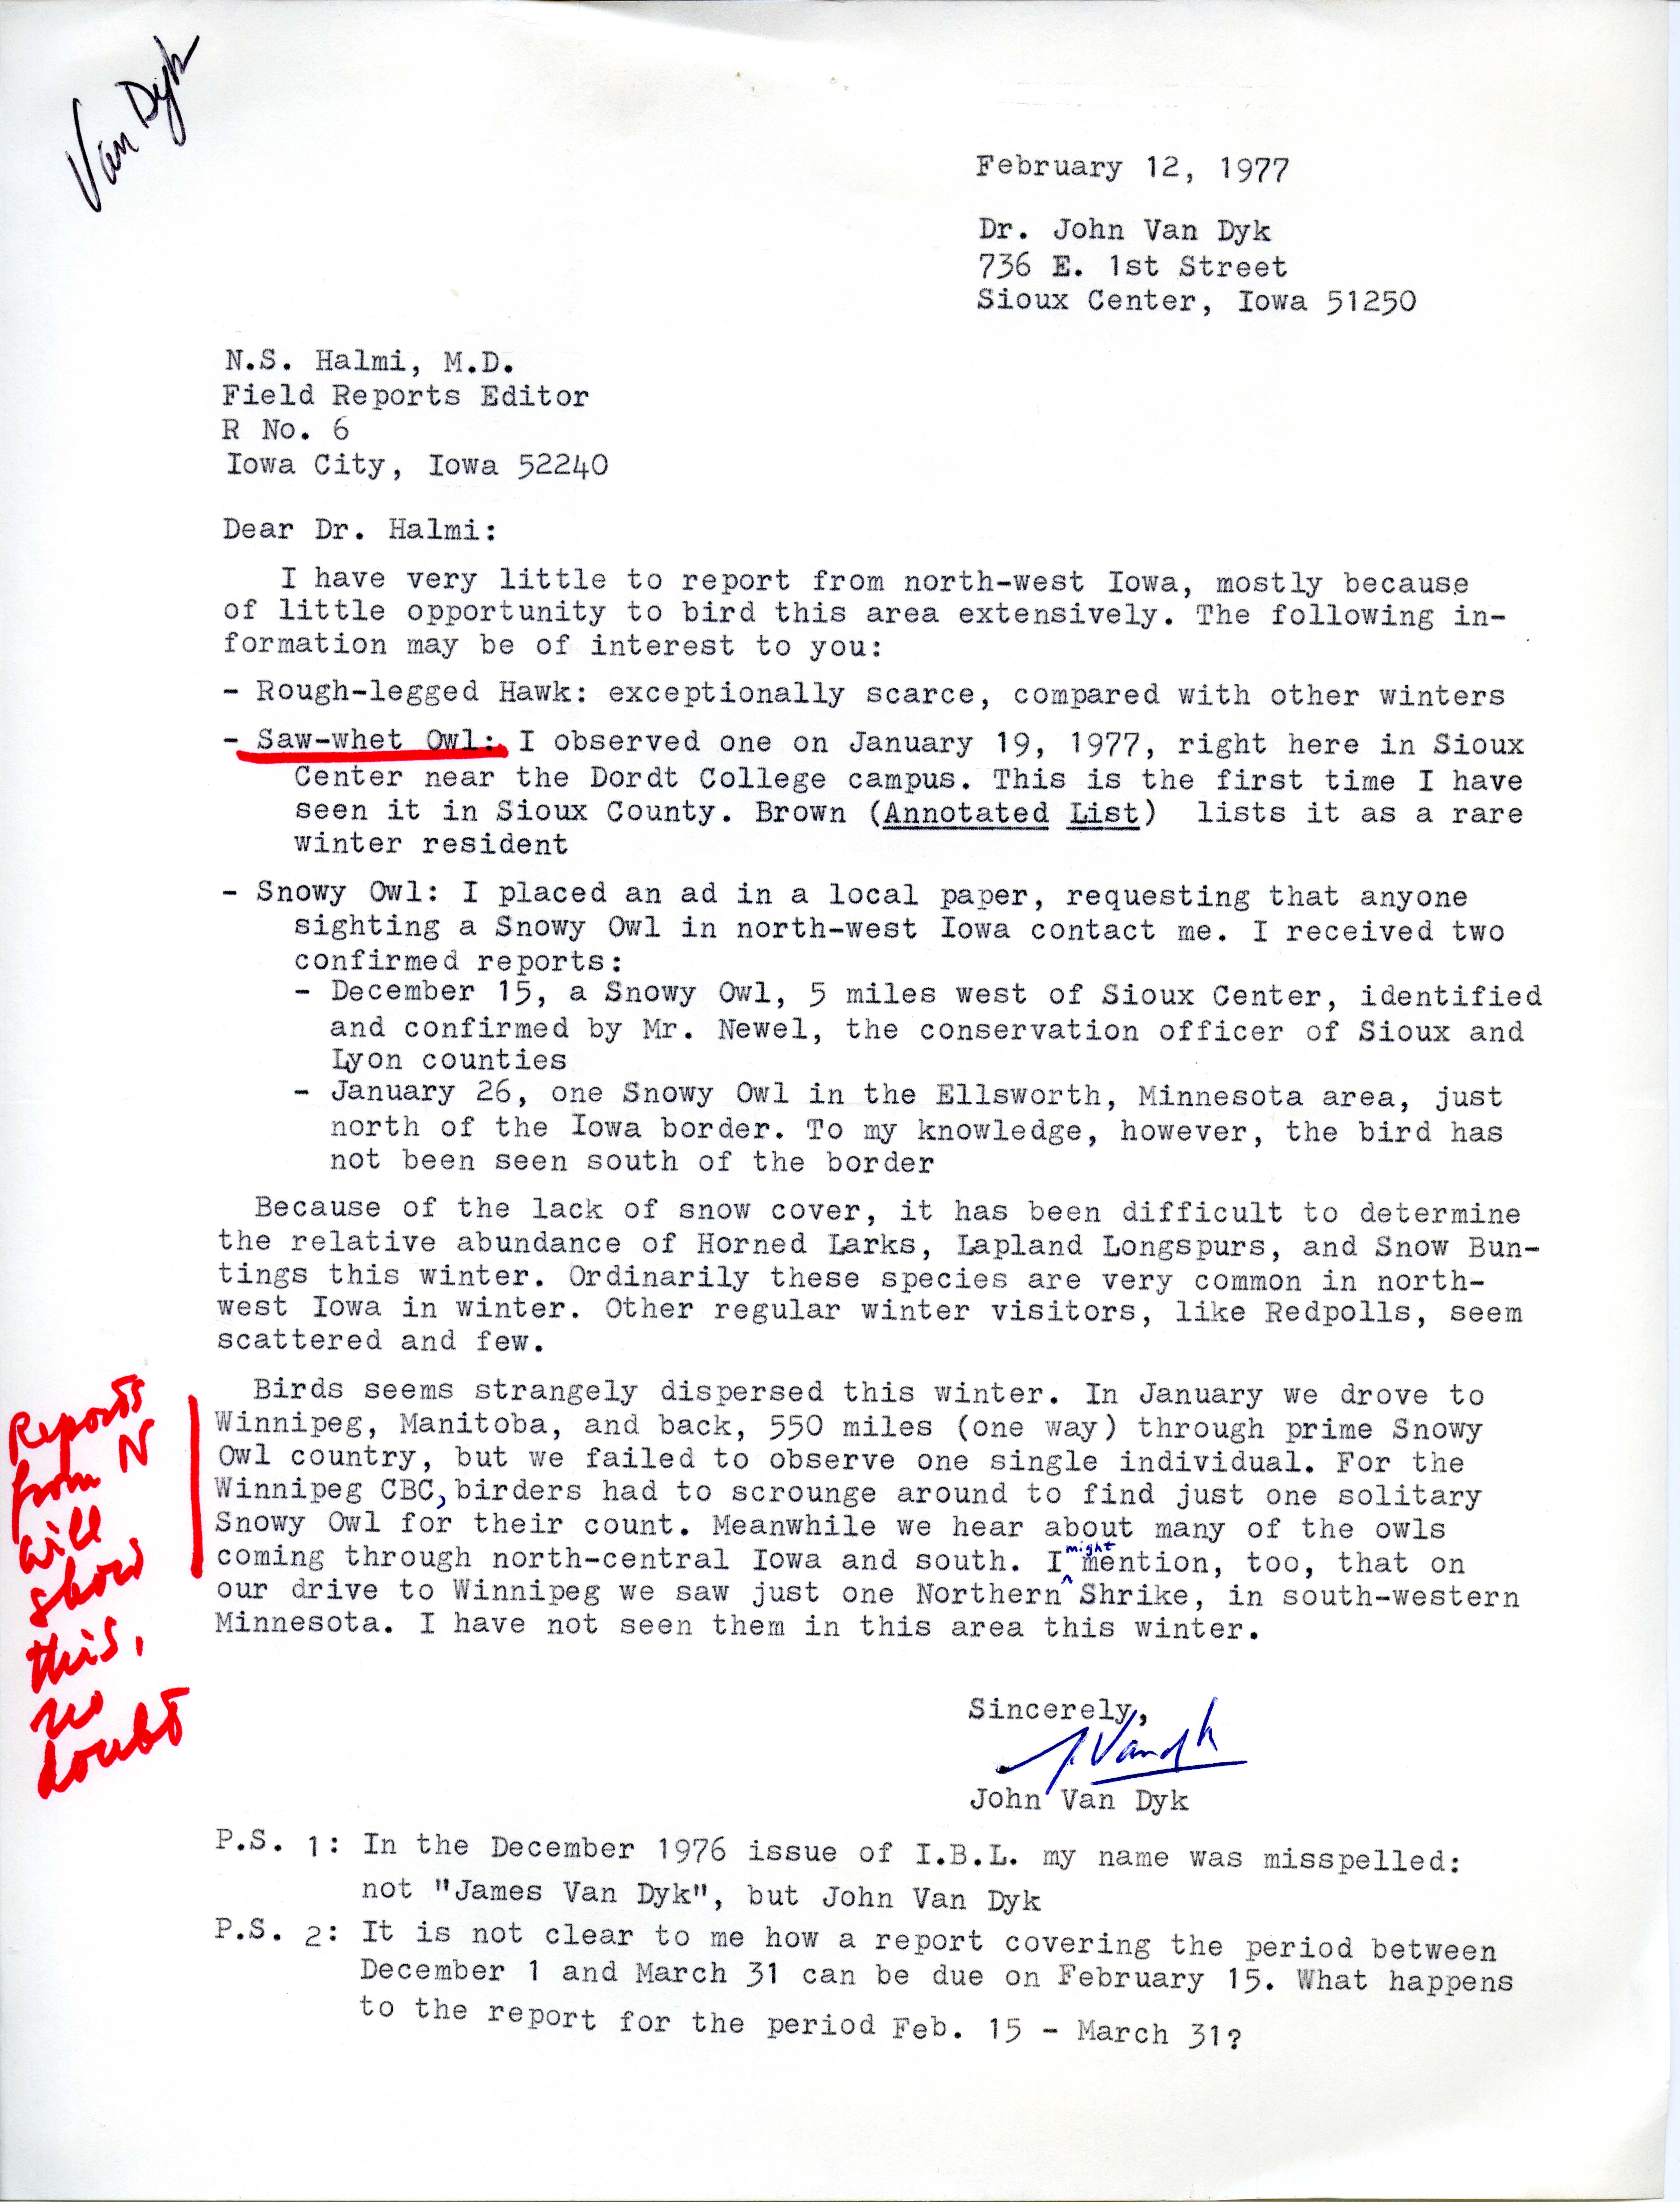 John Van Dyk letter to Nicholas S. Halmi regarding bird sightings, February 12, 1977